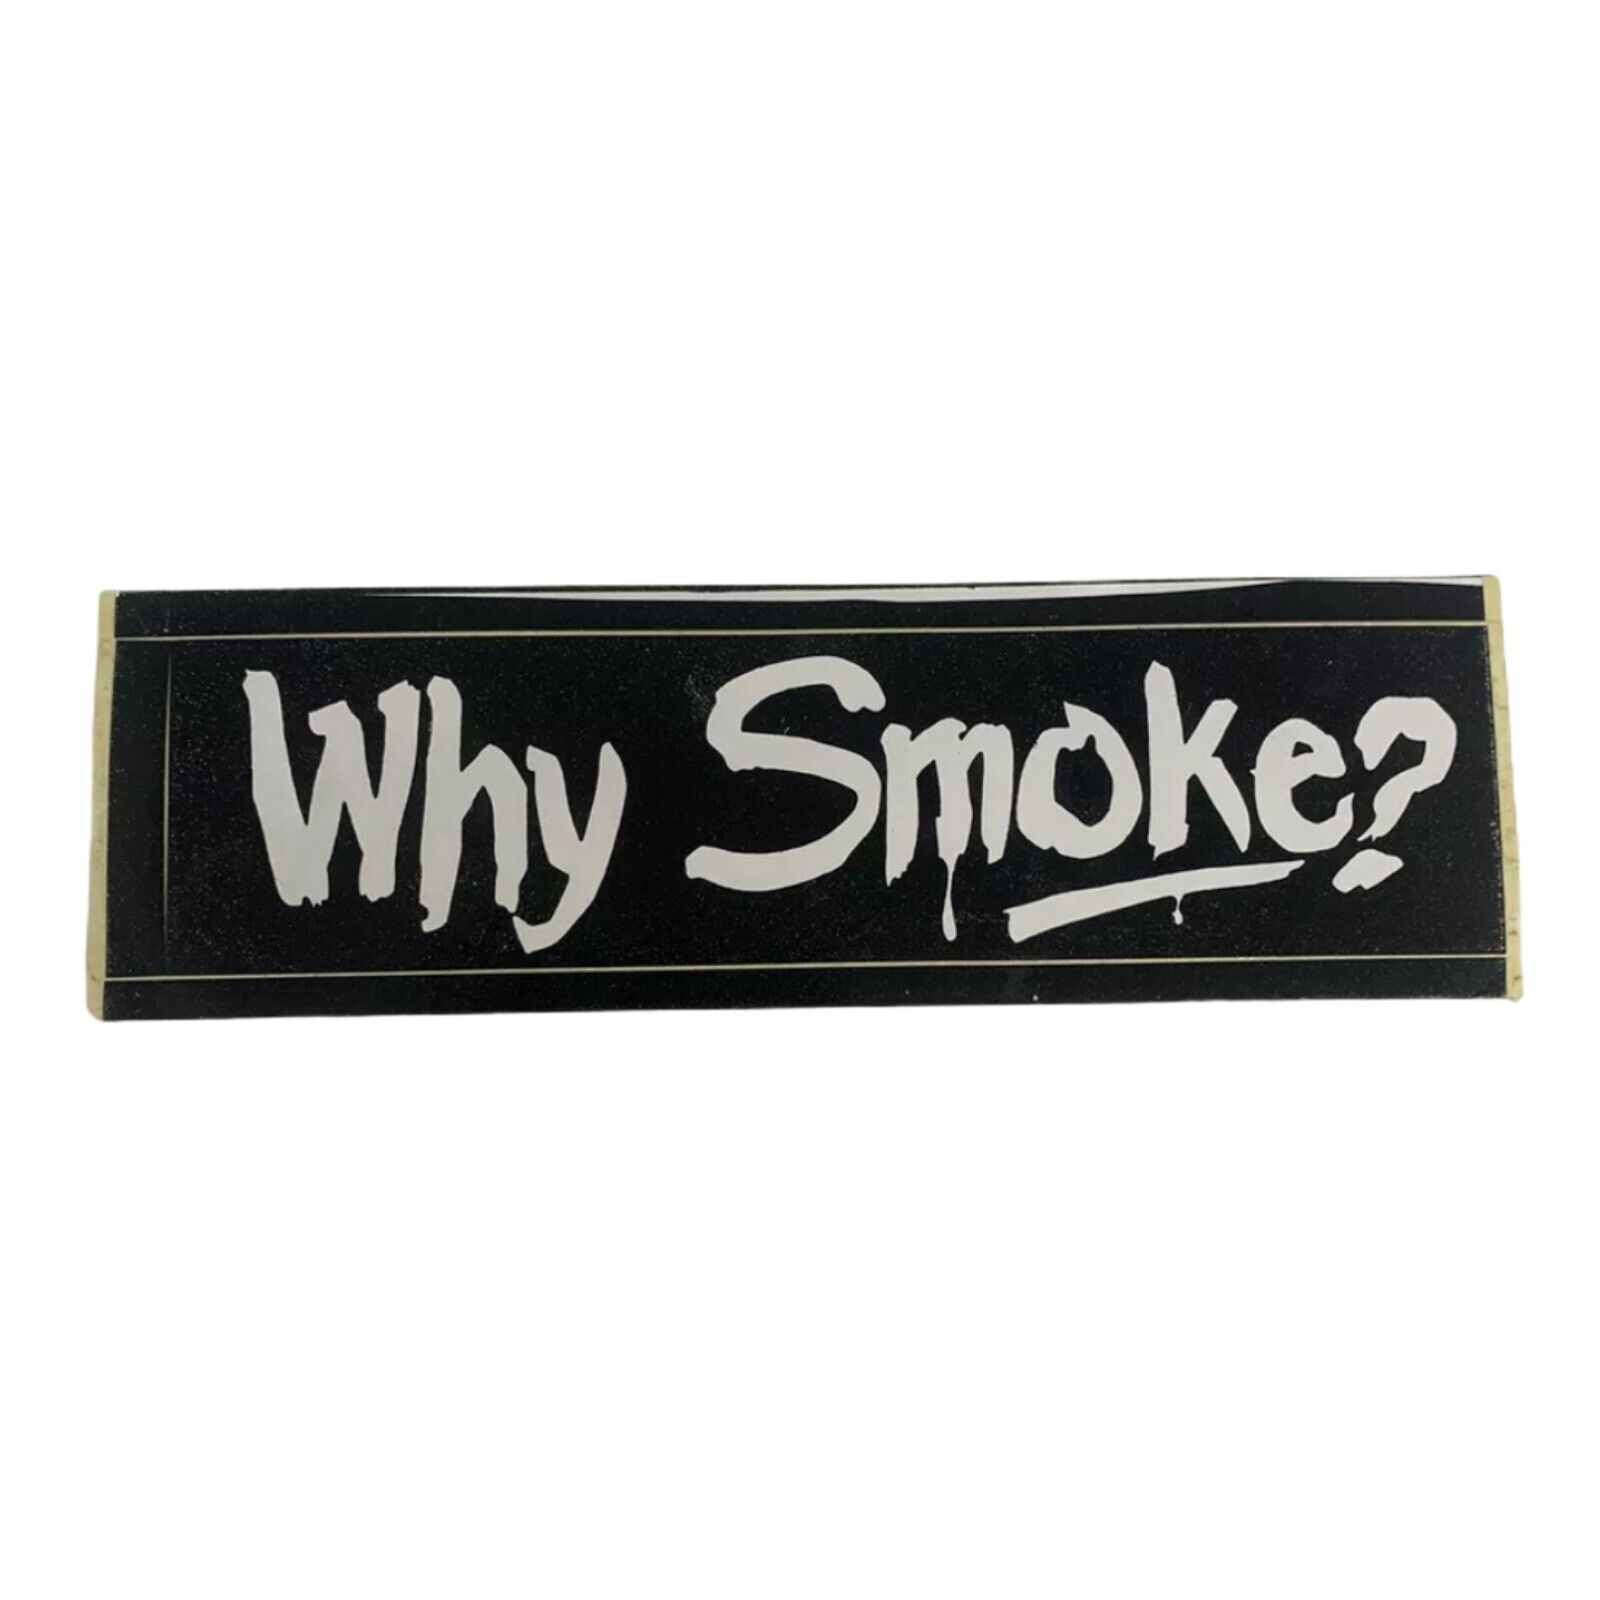 Vintage Anti-Smoking Sticker - 'Why Smoke?' - Retro Design